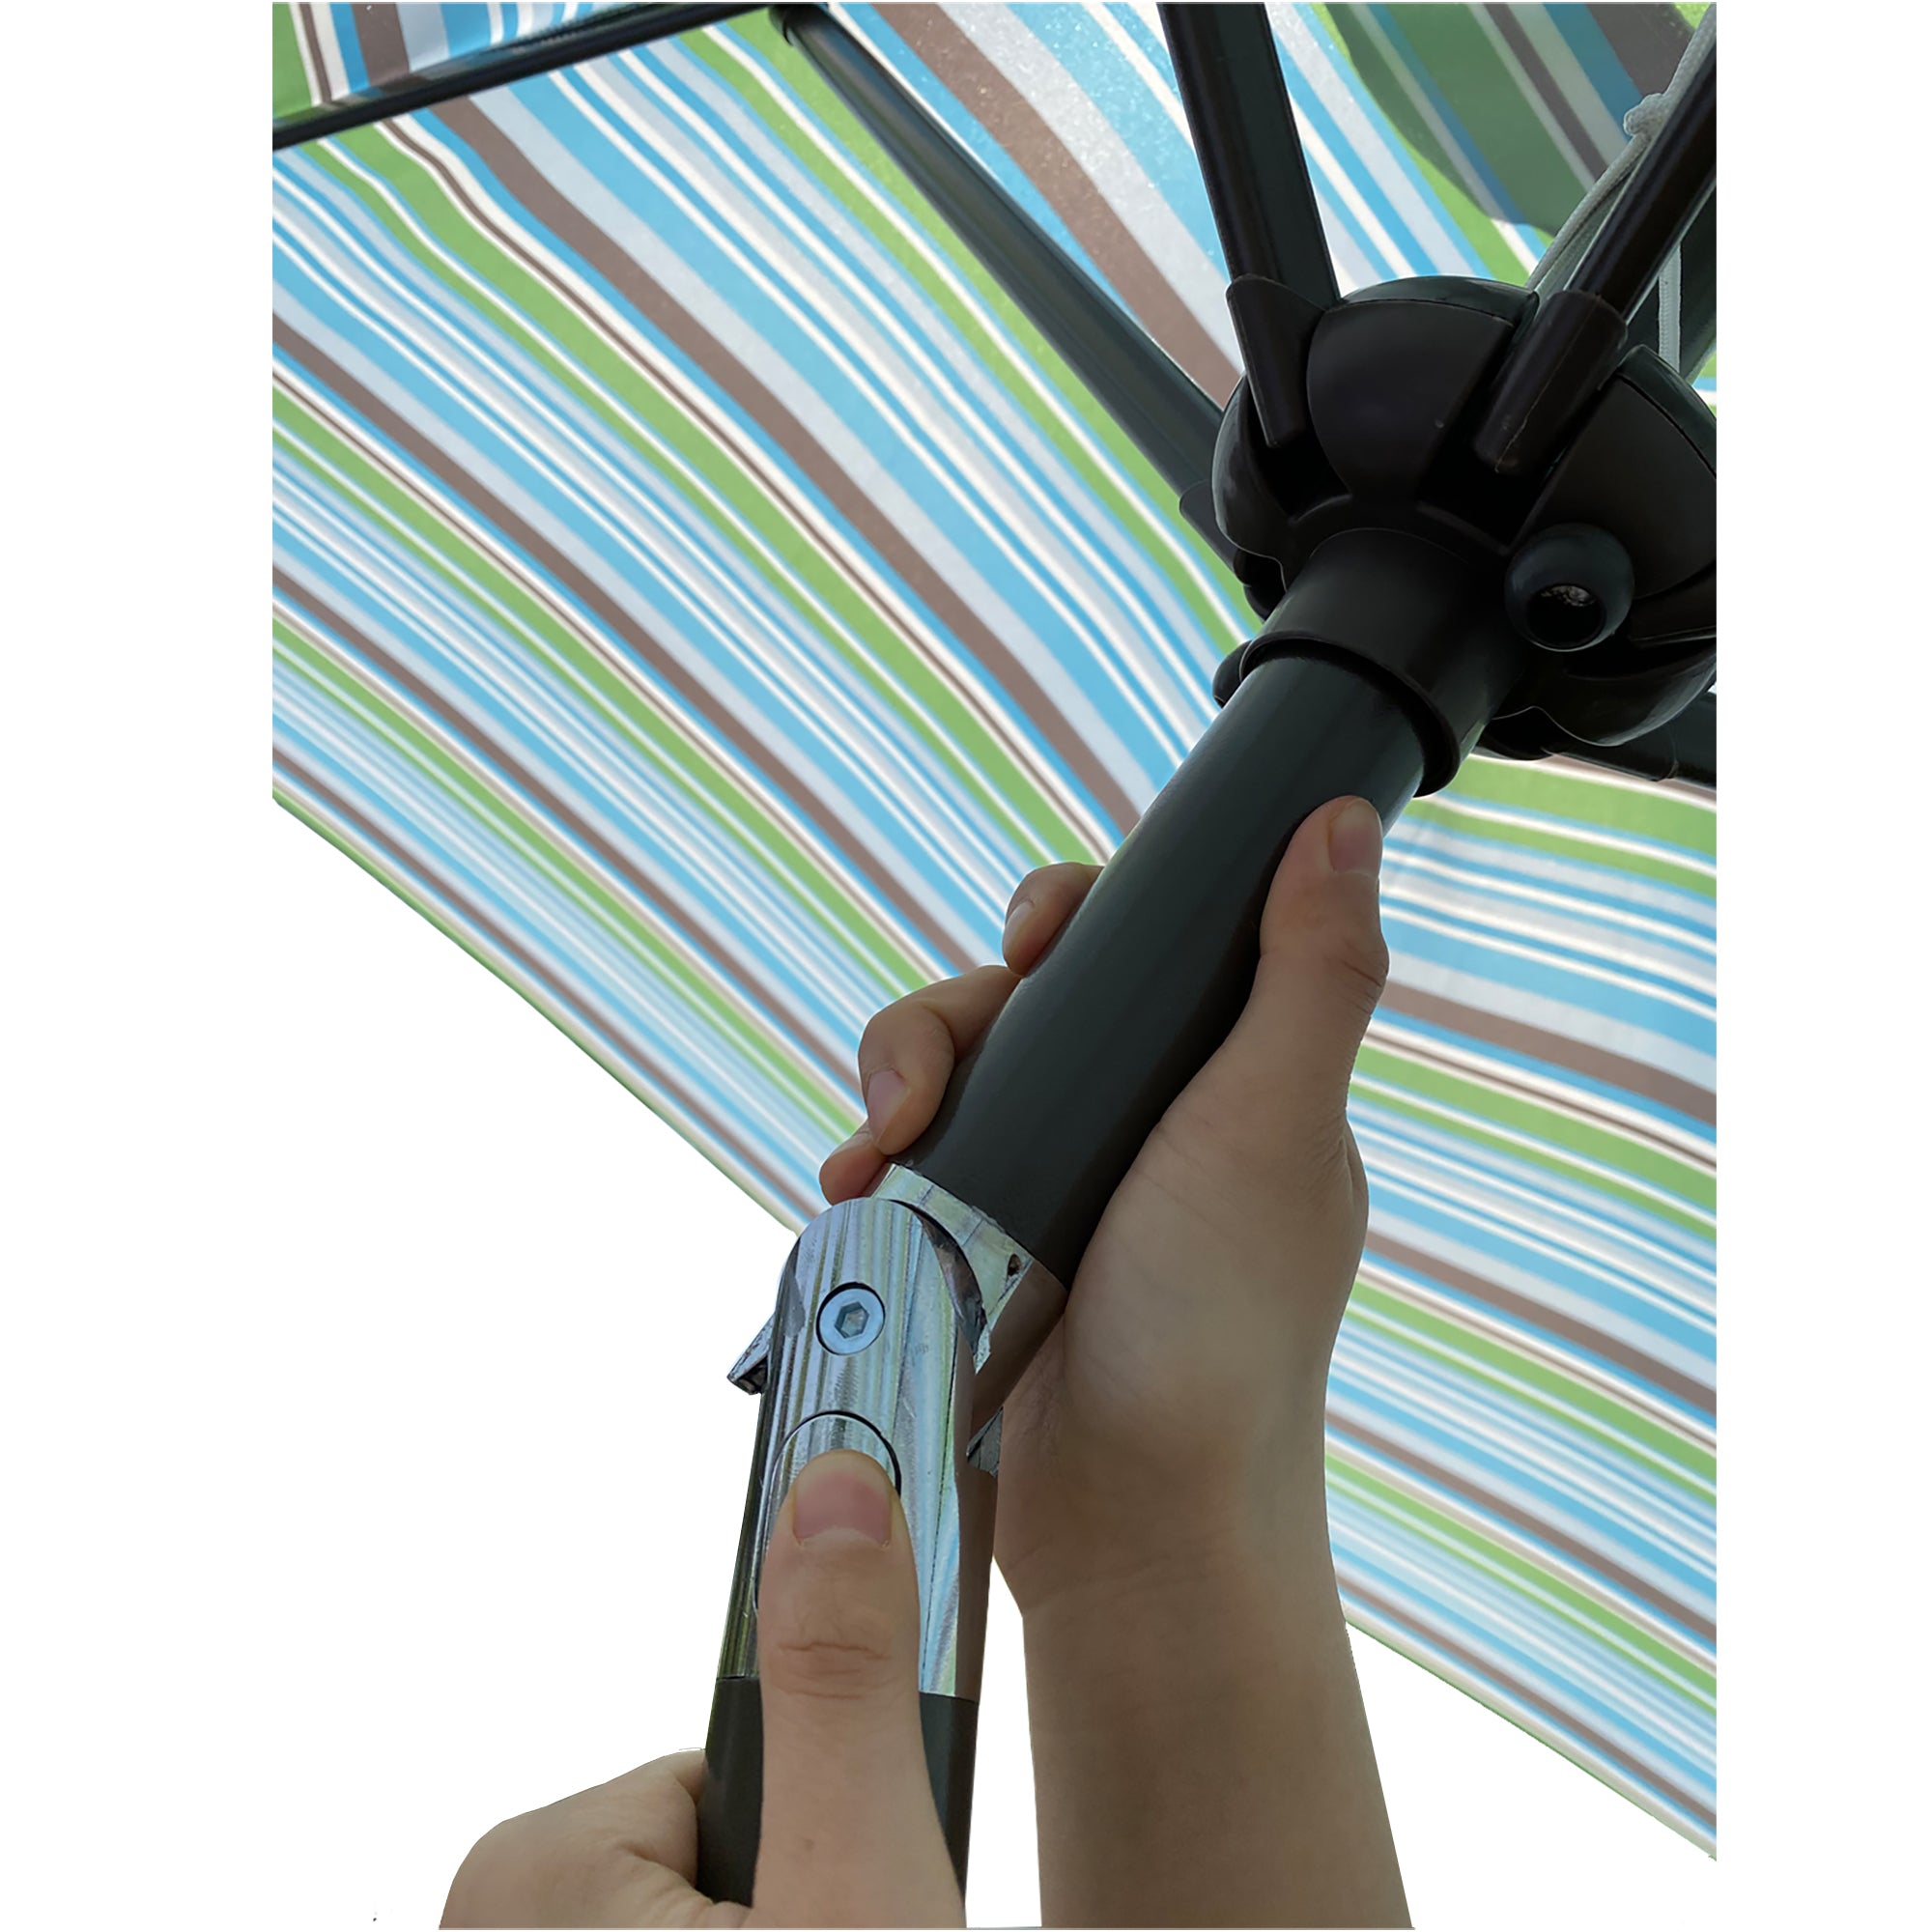 RaDEWAY Outdoor Patio 9-Feet Market Table Umbrella with Push Button Tilt and Crank